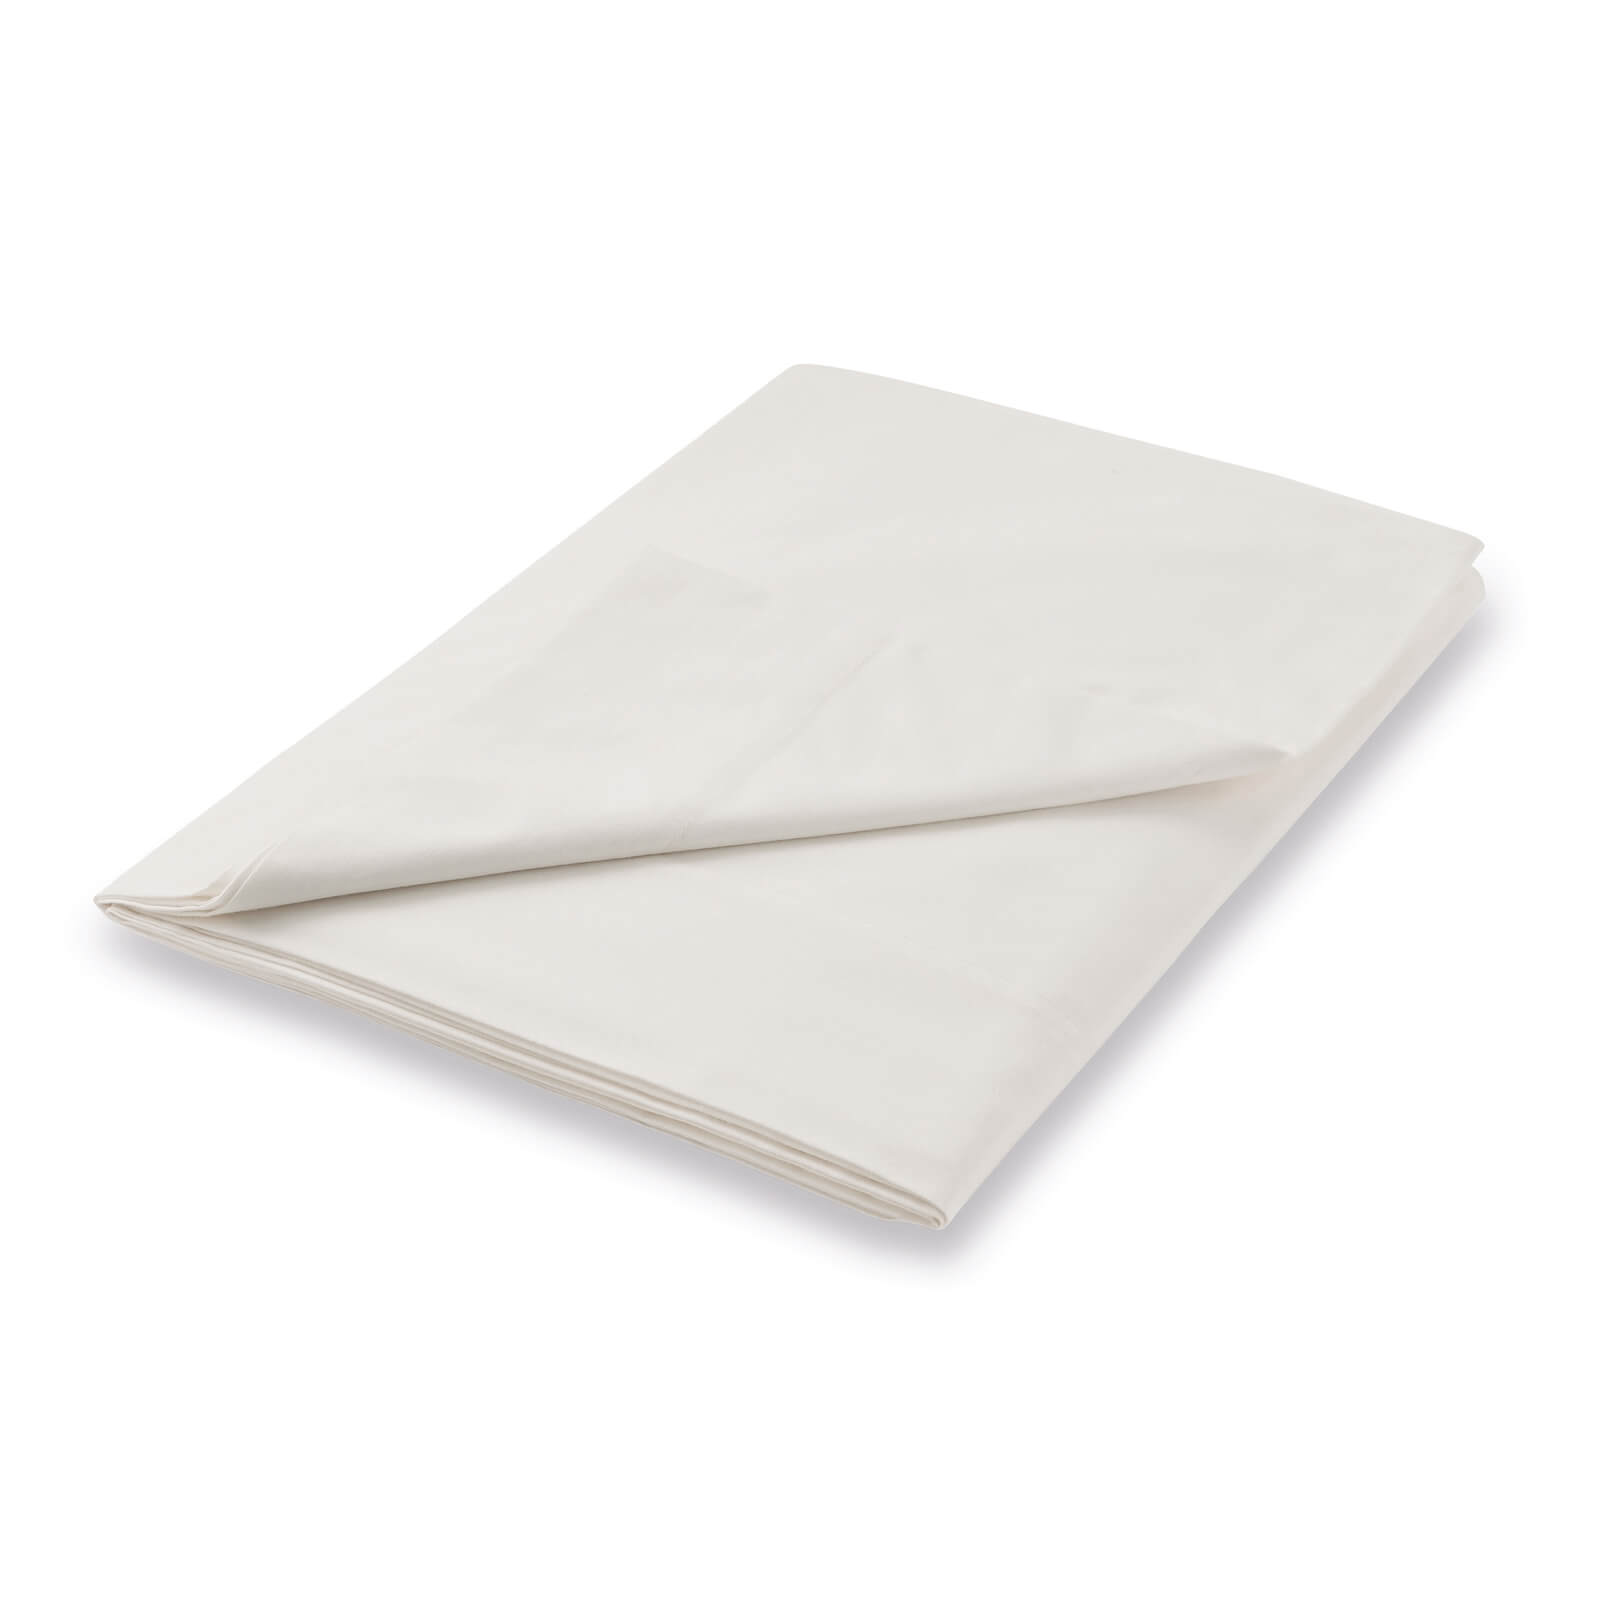 Flat Super King Sized Sheet - Parchment